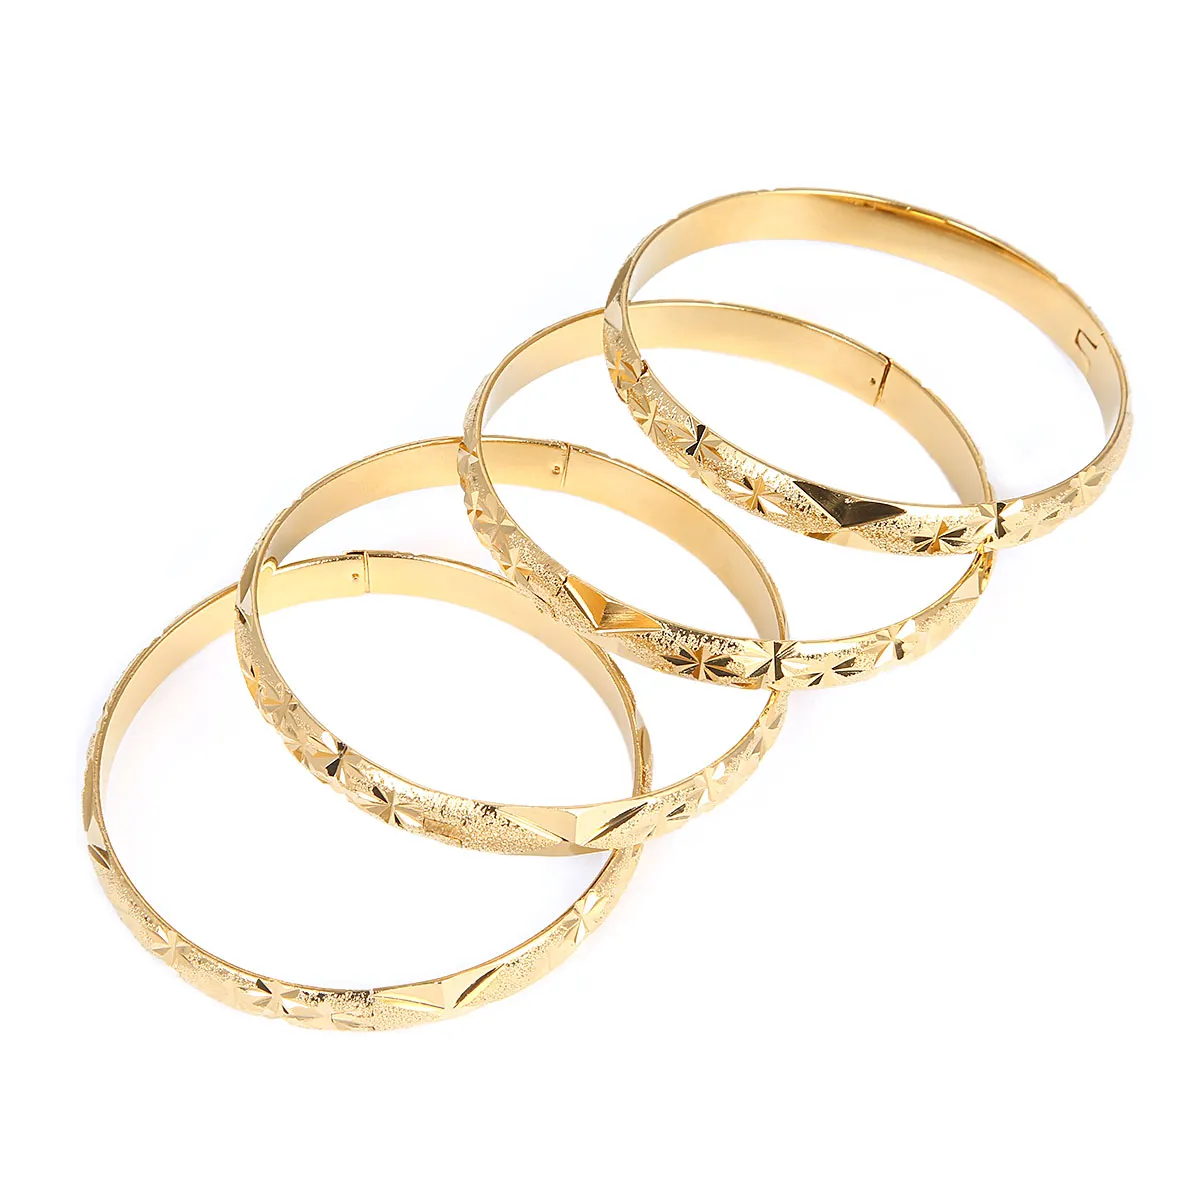 Dubai Gold Bangles for Women Men Gold Color Wide 8MM Bracelets African European Ethiopia Jewelry Bangles